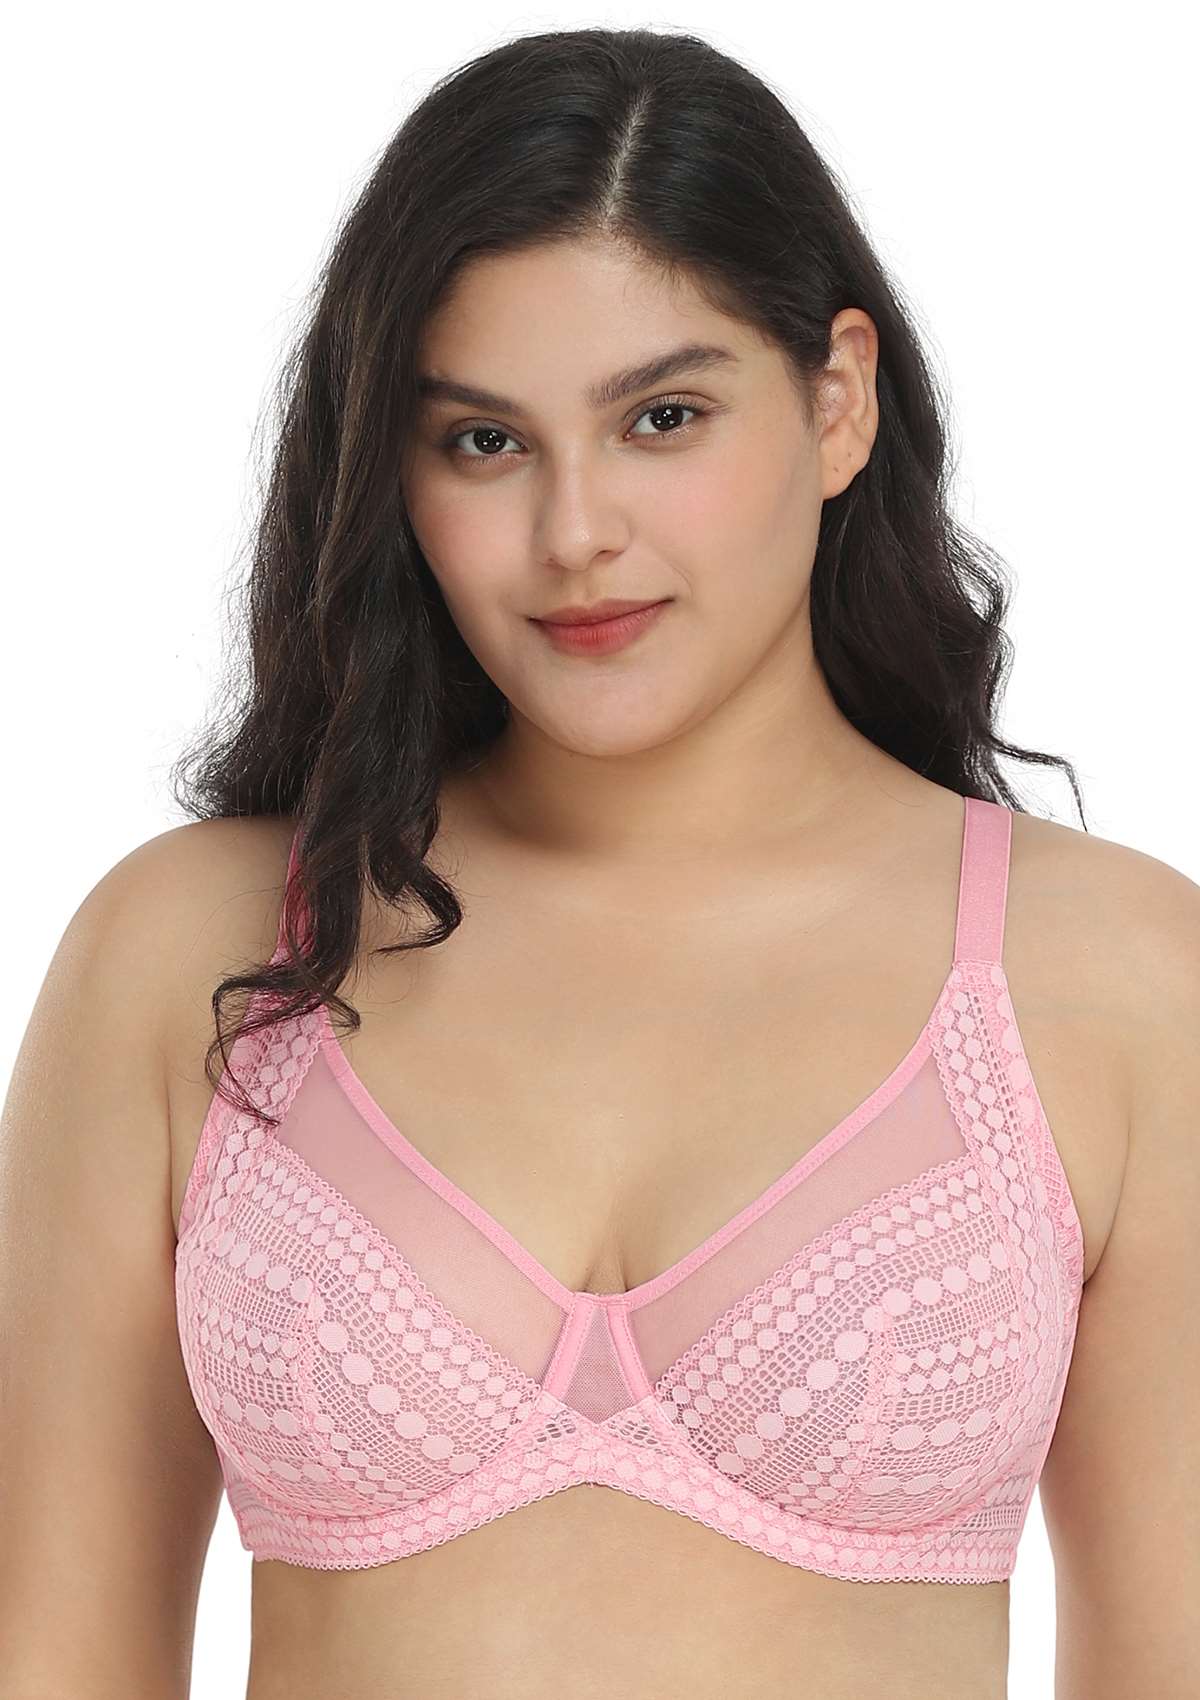 HSIA Heroine Lace Unlined Bra: Bra That Hides Back Fat - Plus Size - Pink / 34 / D